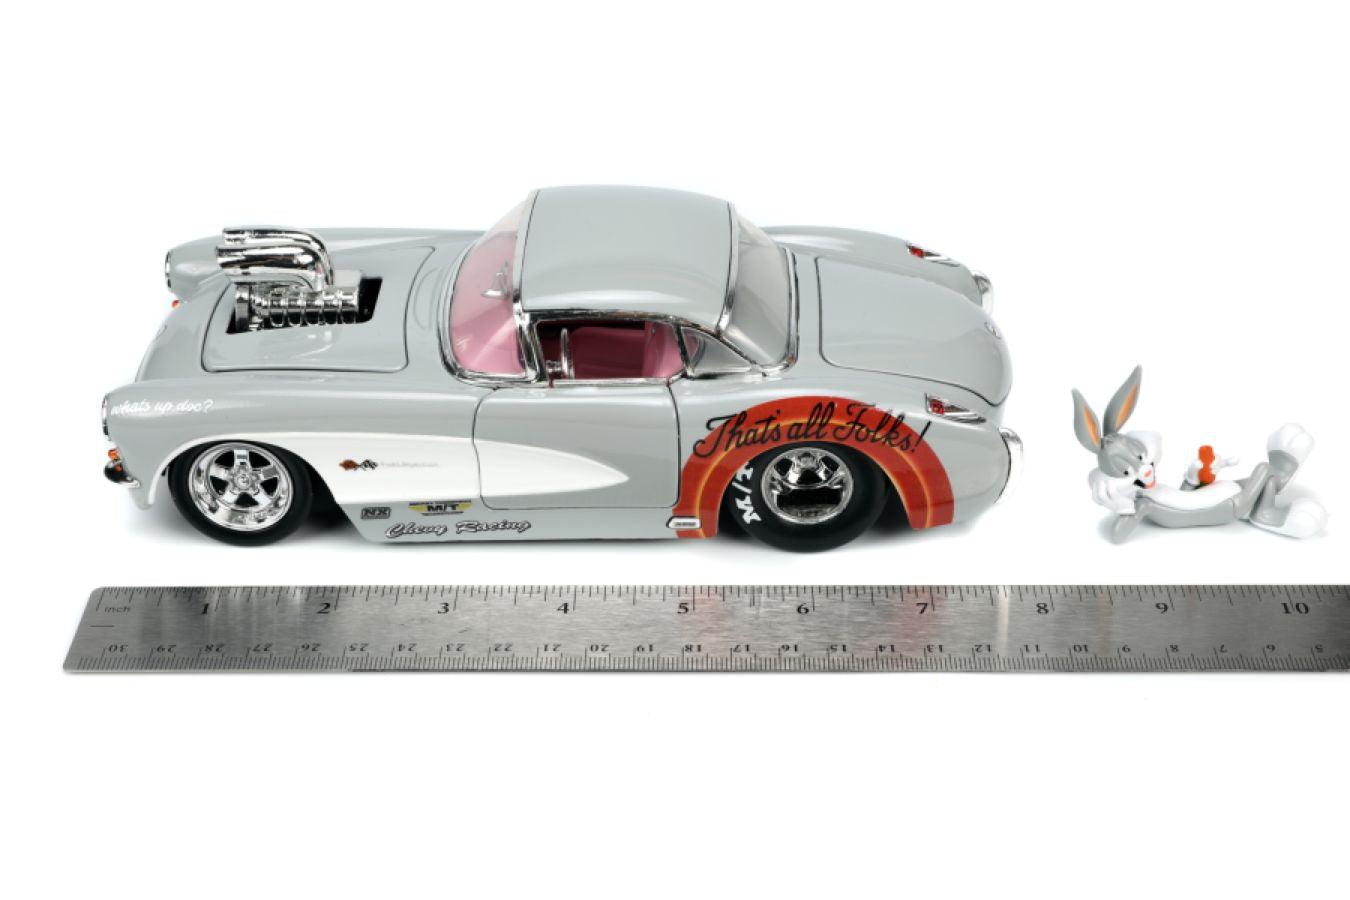 JAD32390 Looney Tunes - 57 Chevrolet Corvette with Bugs Bunny 1:24 Scale - Jada Toys - Titan Pop Culture